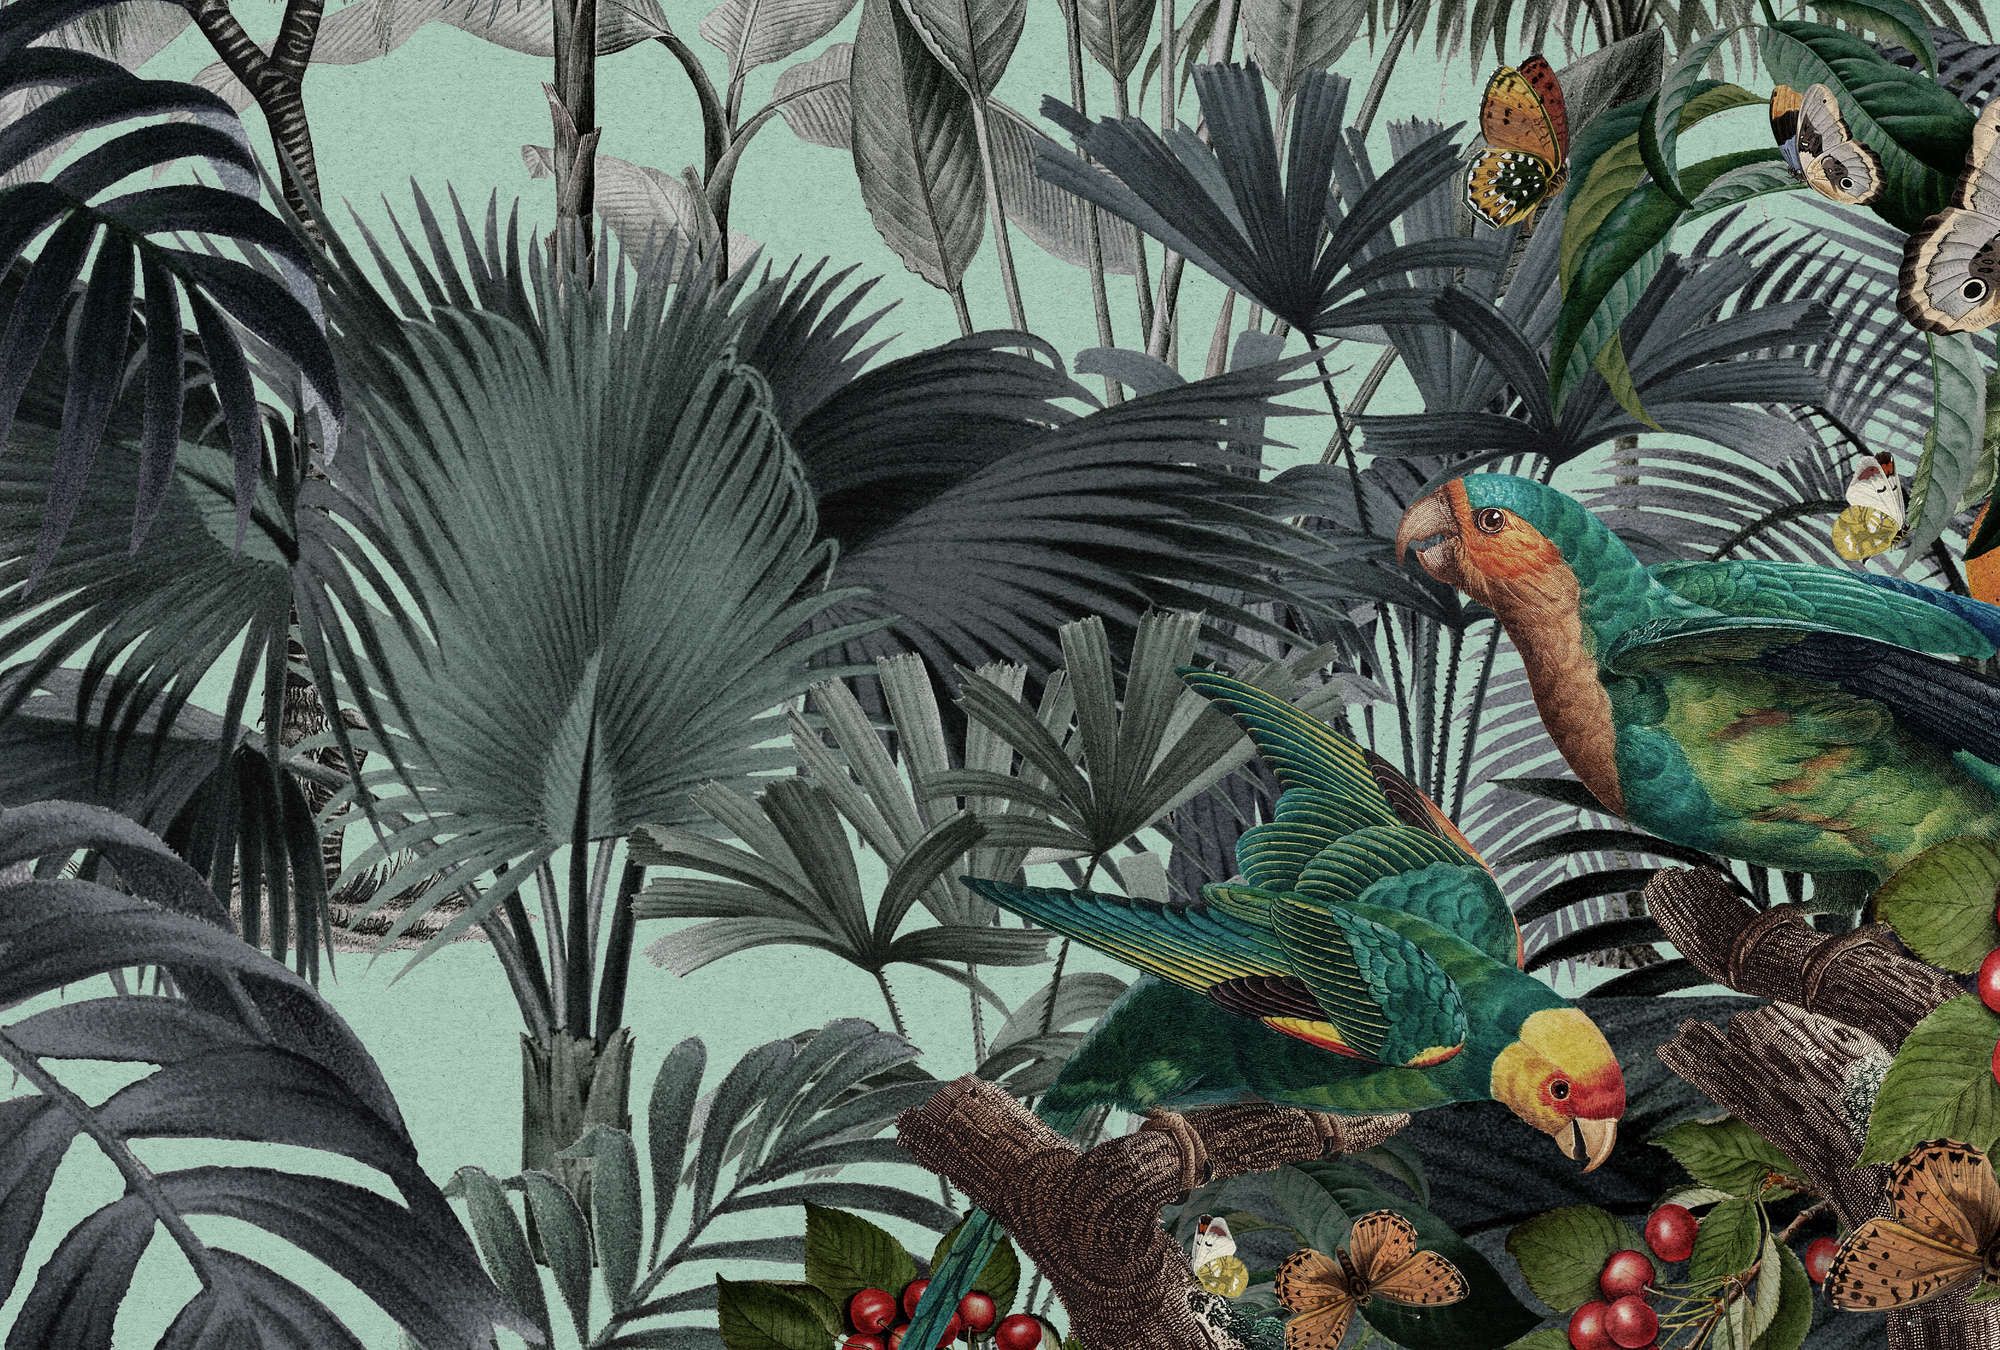             Digital behang »arabella« - Jungle & papegaaien op kraftpapier look - Licht gestructureerde vliesstof
        